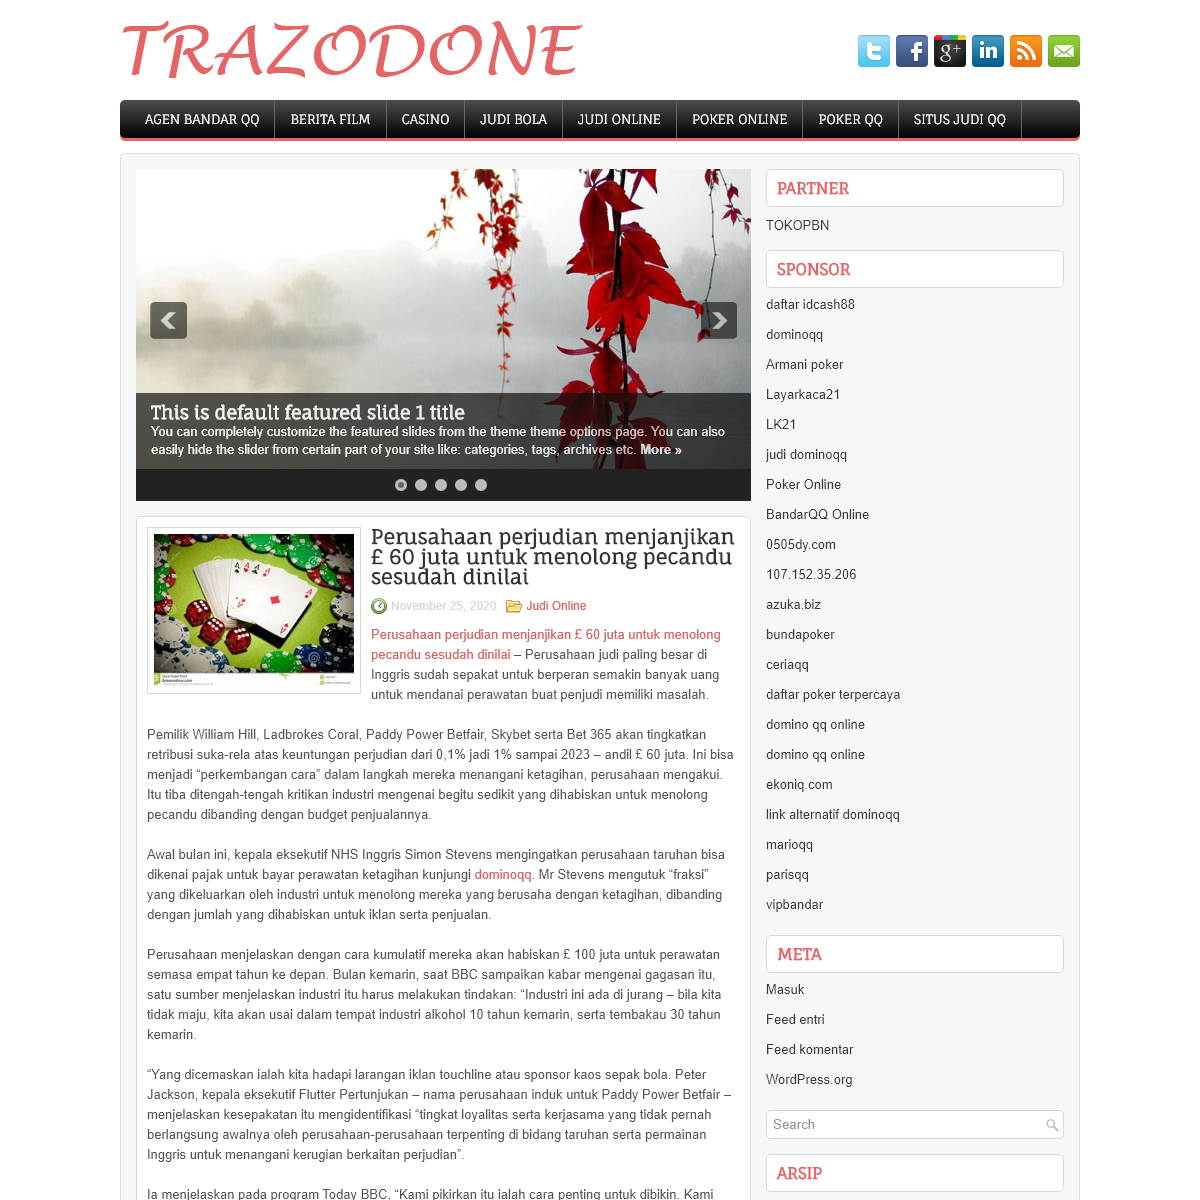 A complete backup of trazodone2020.com